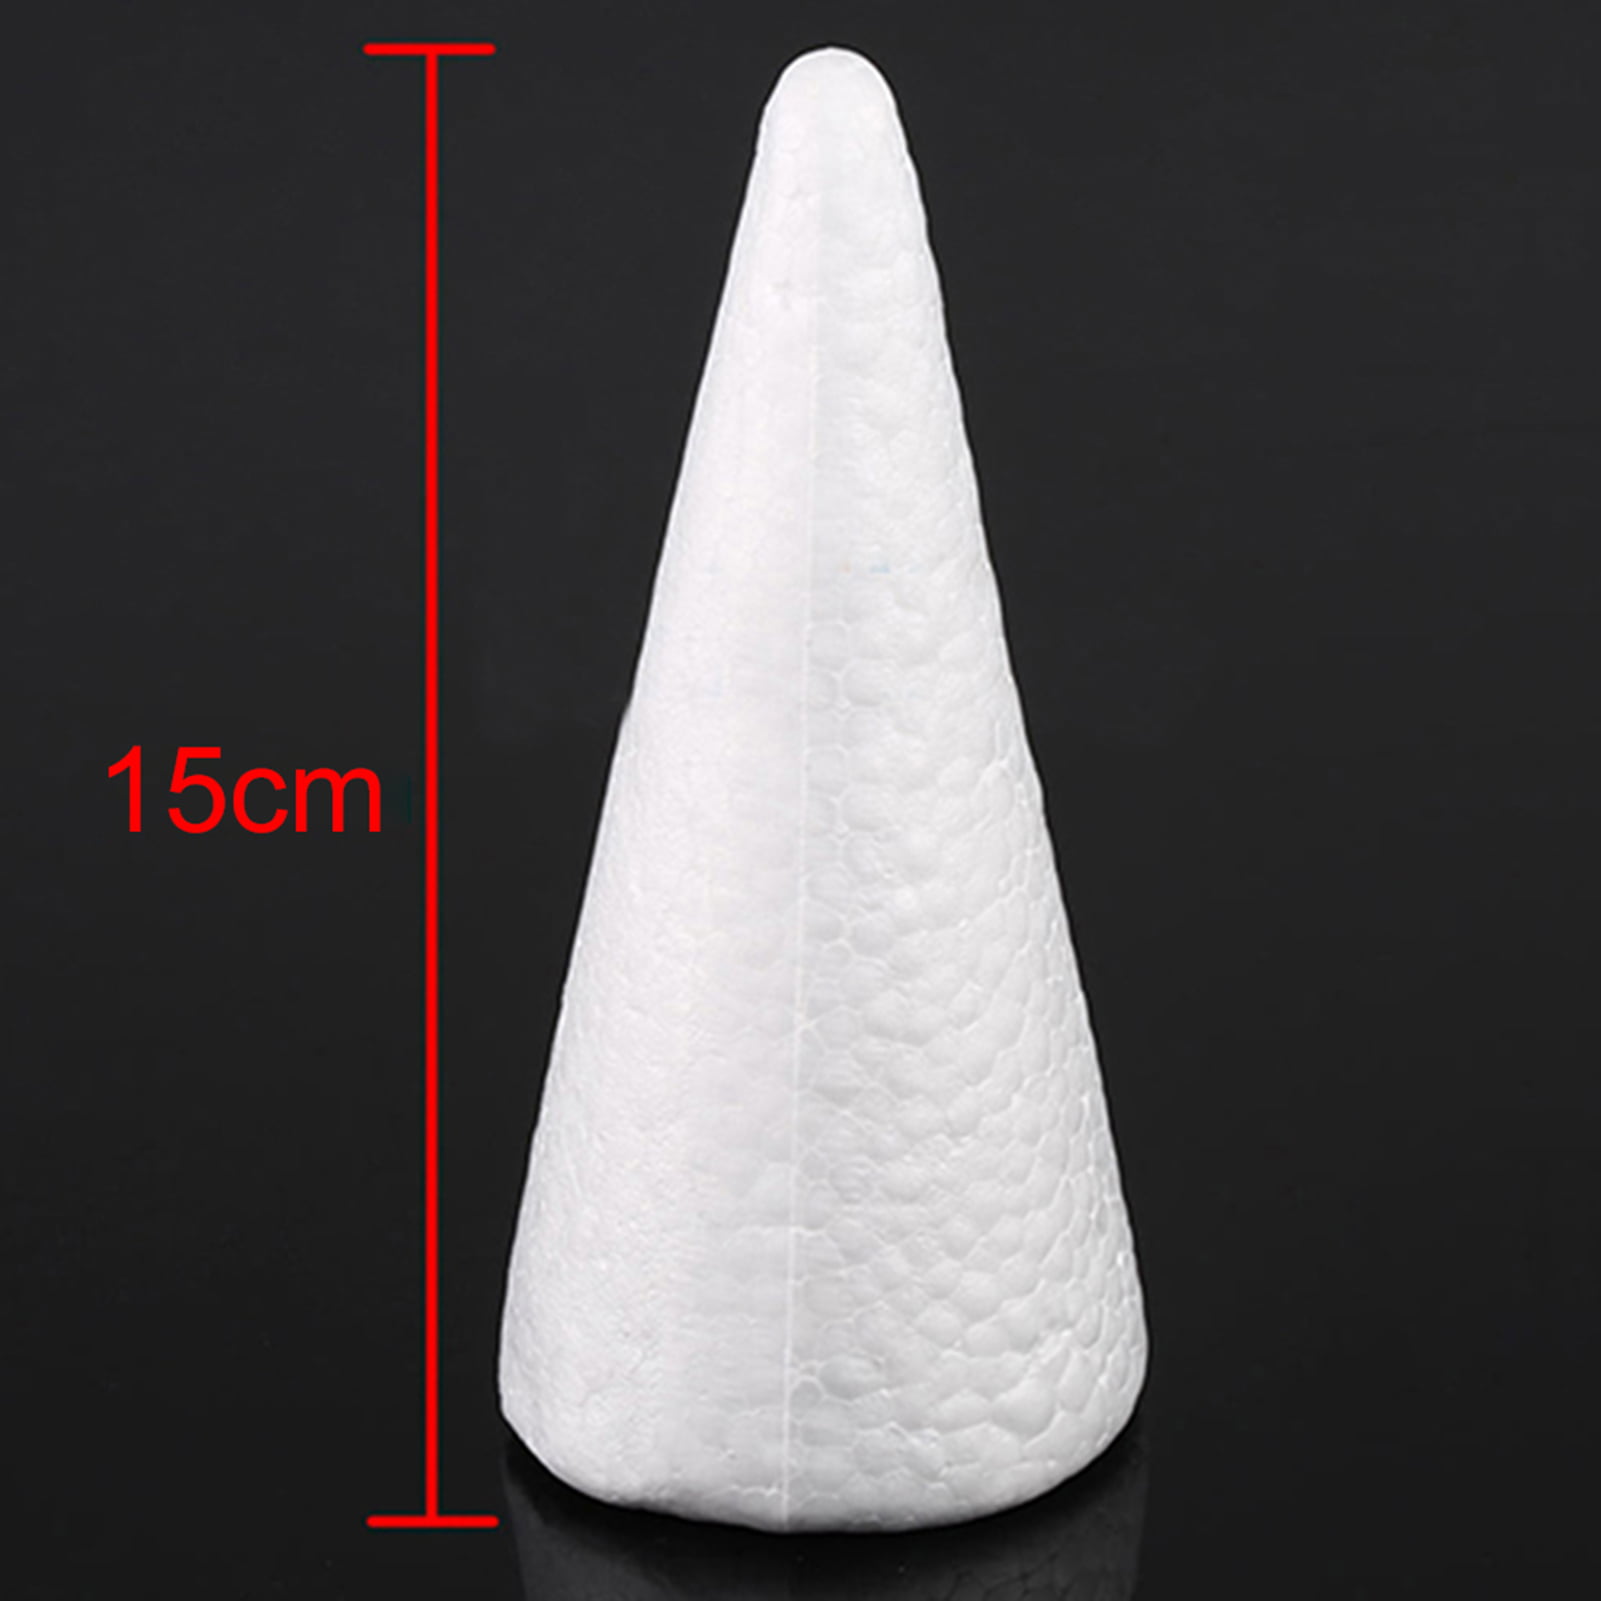 Happyyami 12pcs Craft Foam Cone White Styrofoam Cones for DIY Home Craft Project Christmas Tree Table Centerpiece 15cm